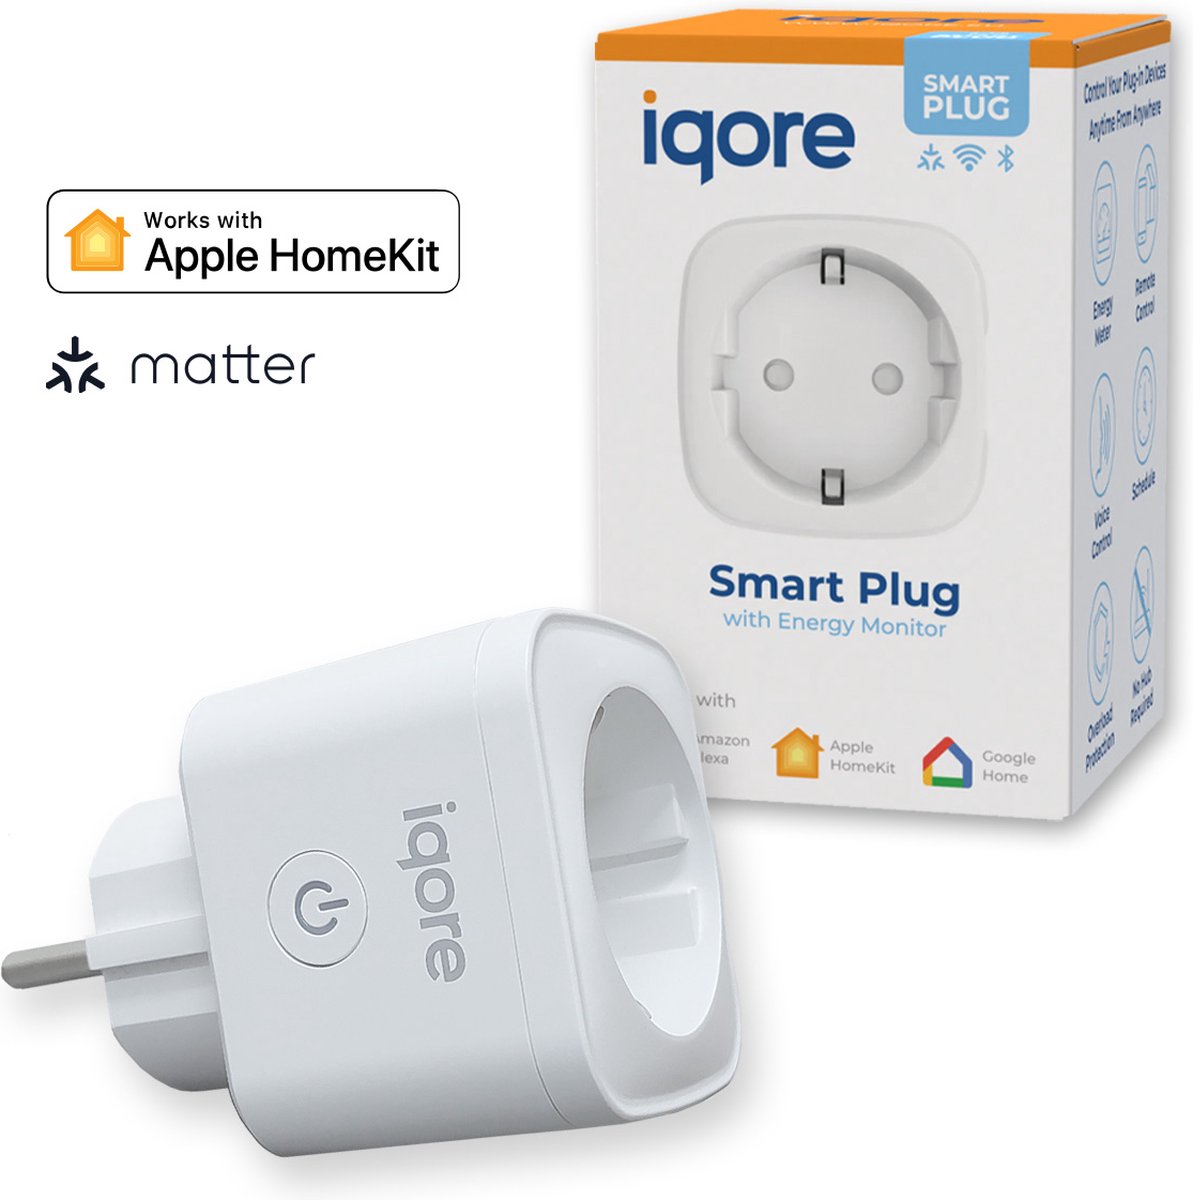 iqore - Slimme stekker WiFi - APPLE HOMEKIT - met ondersteuning voor MATTER - 16A 3680W Smart plug met Stroomverbruikmeter, Energiemeter en Timer - Compatibel met Apple Homekit / Siri, Google Home - Smart Life app